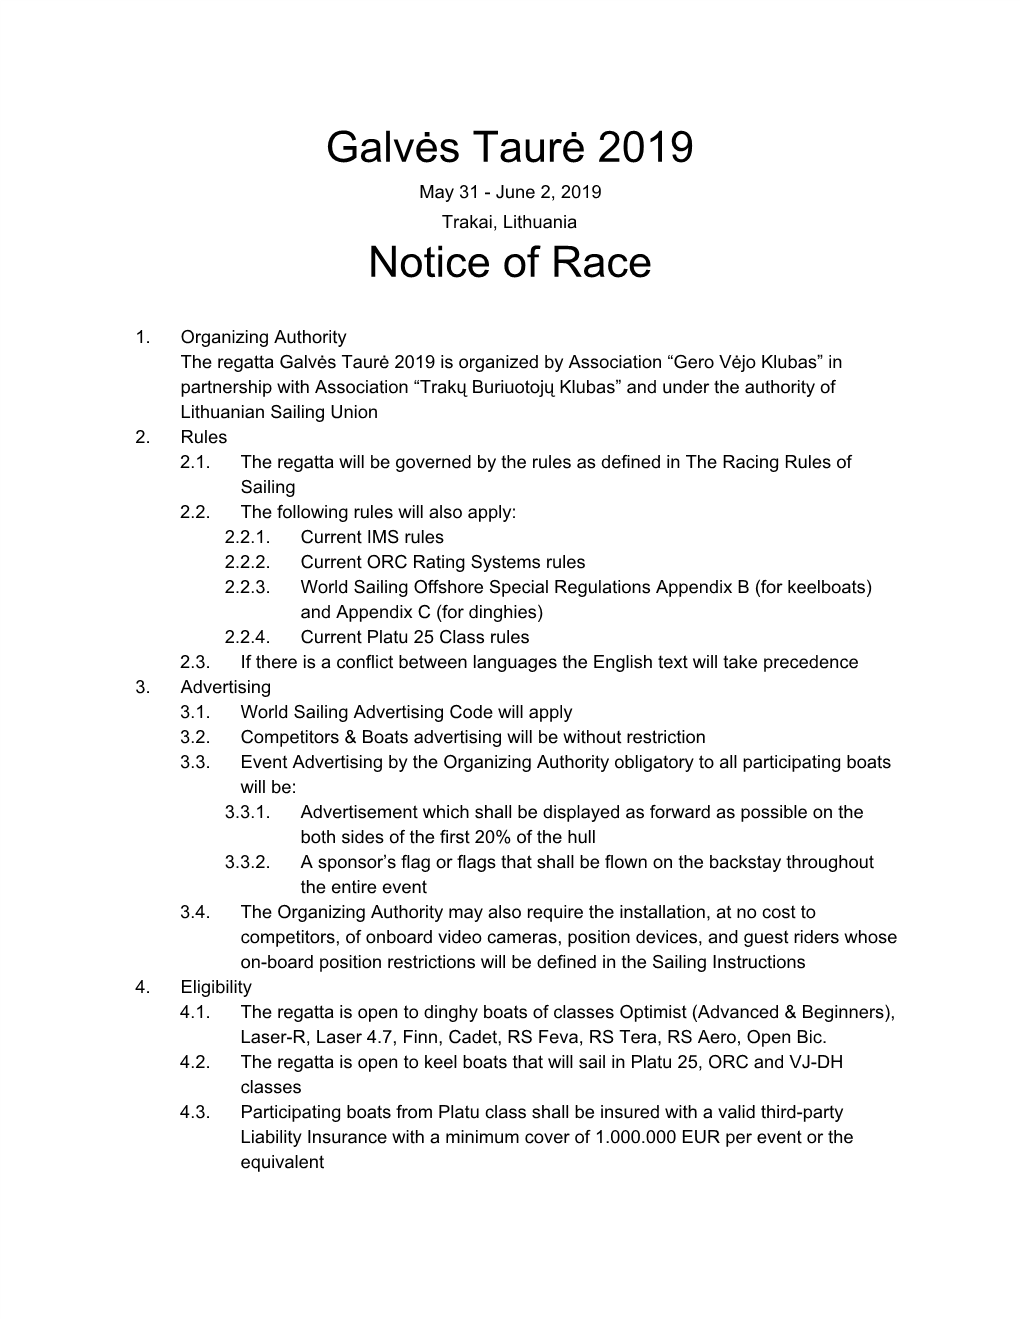 Galvės Taurė 2019 Notice of Race